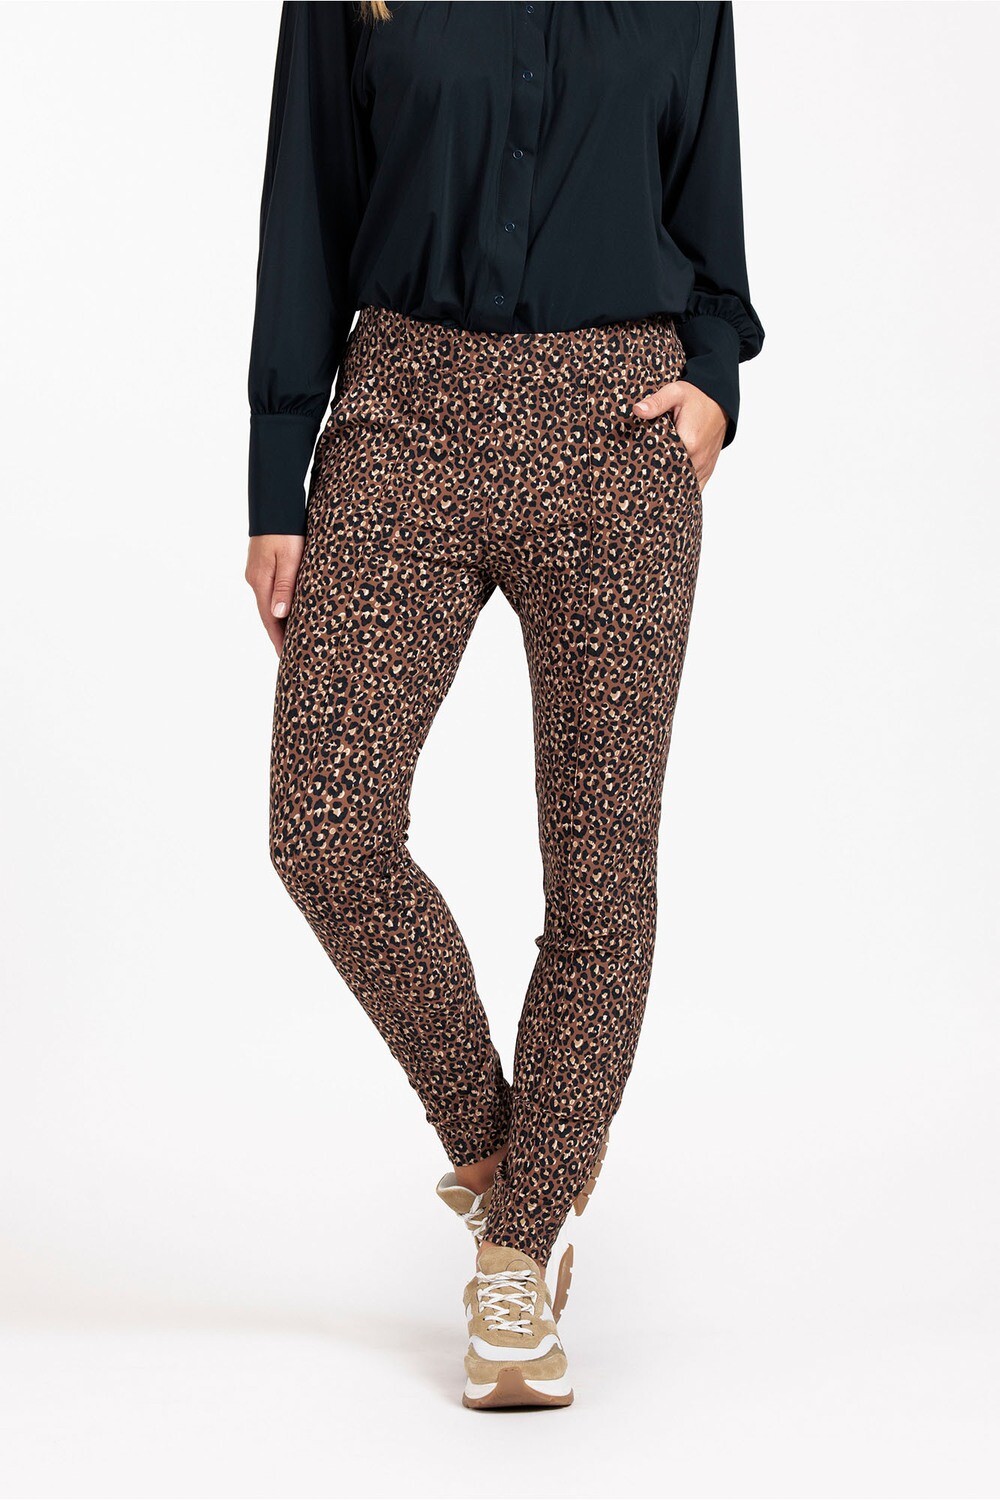 Studio Anneloes Laura leopard trousers, bruin, Size: XS